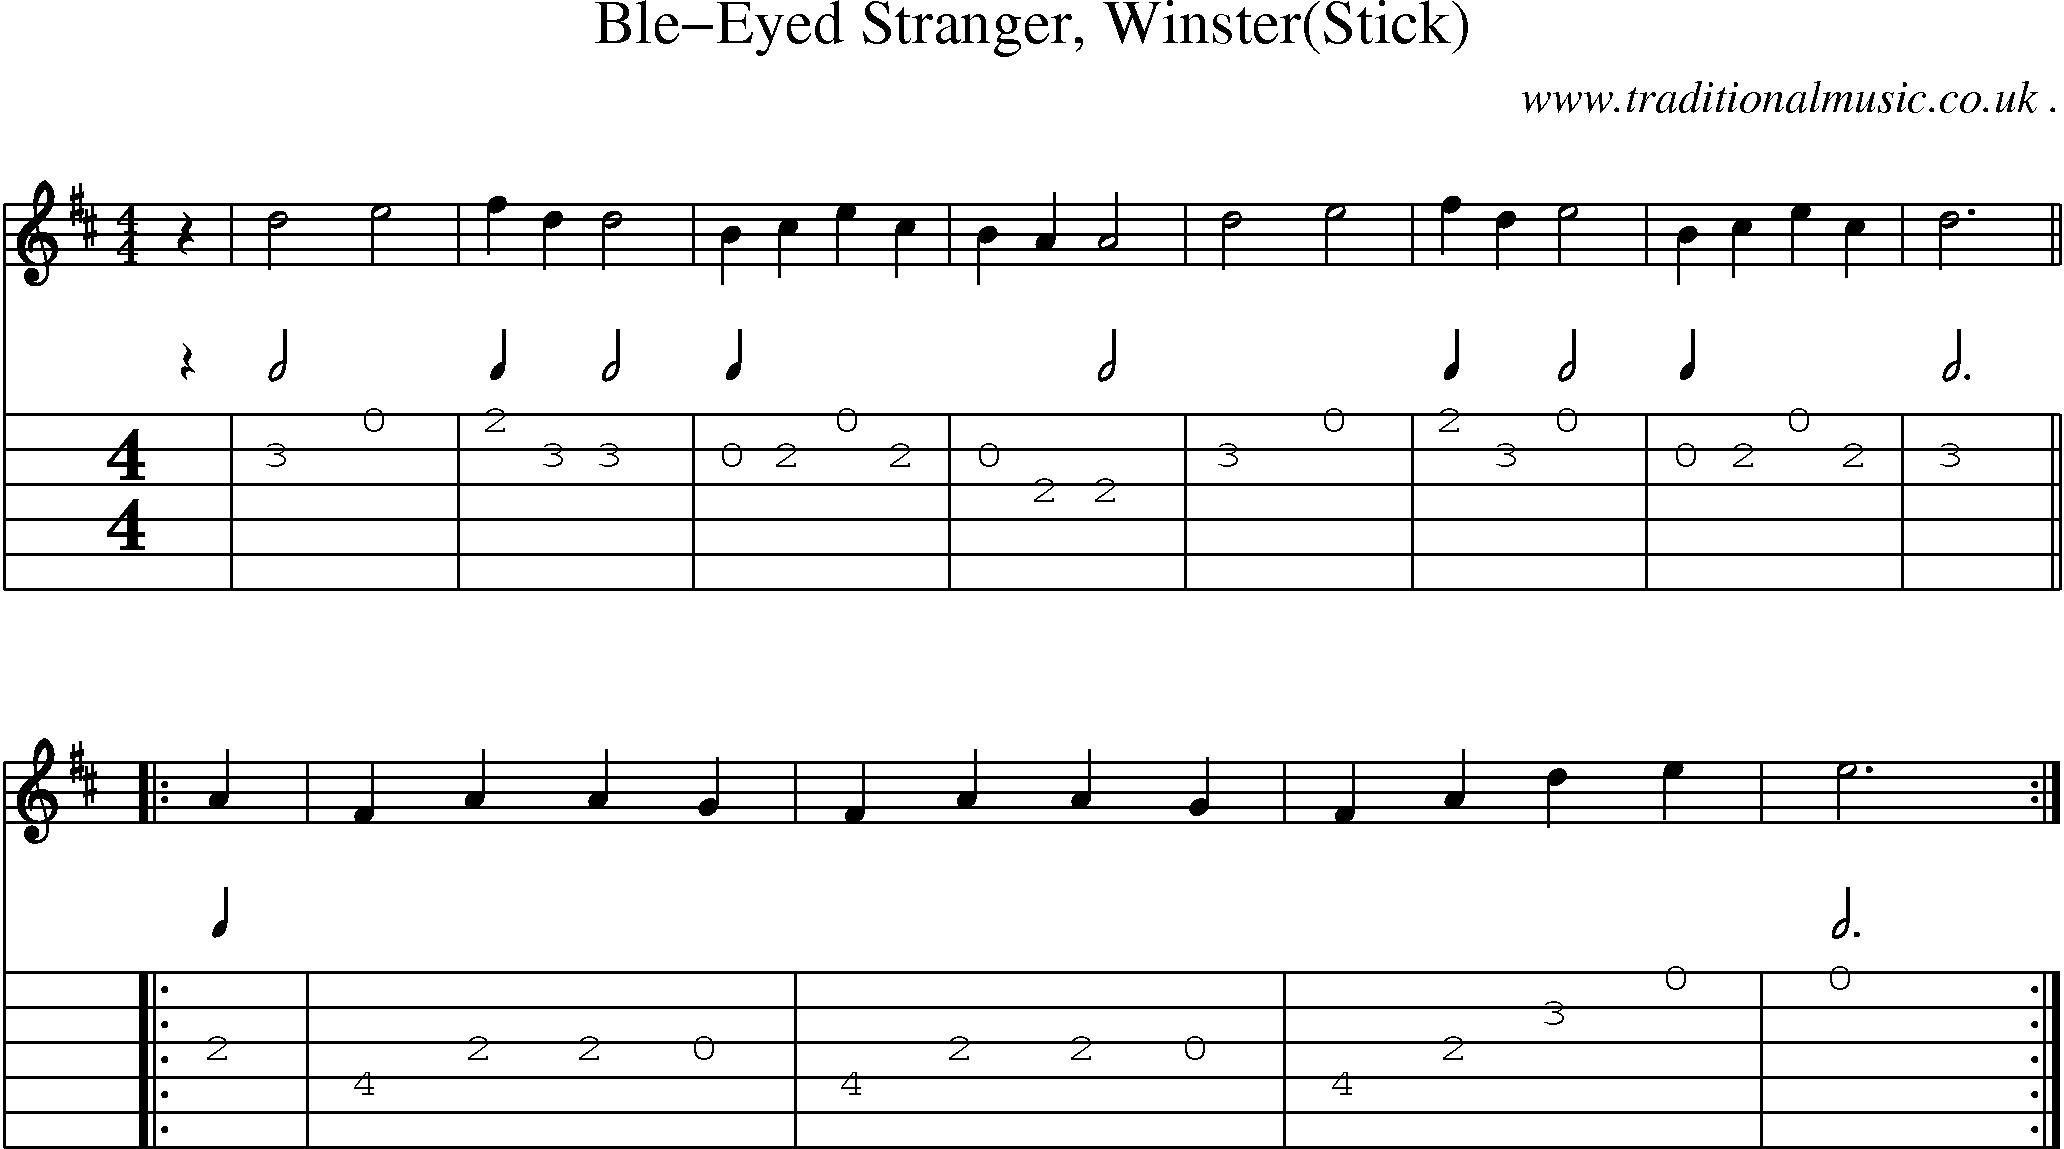 Sheet-Music and Guitar Tabs for Ble-eyed Stranger Winster (stick)